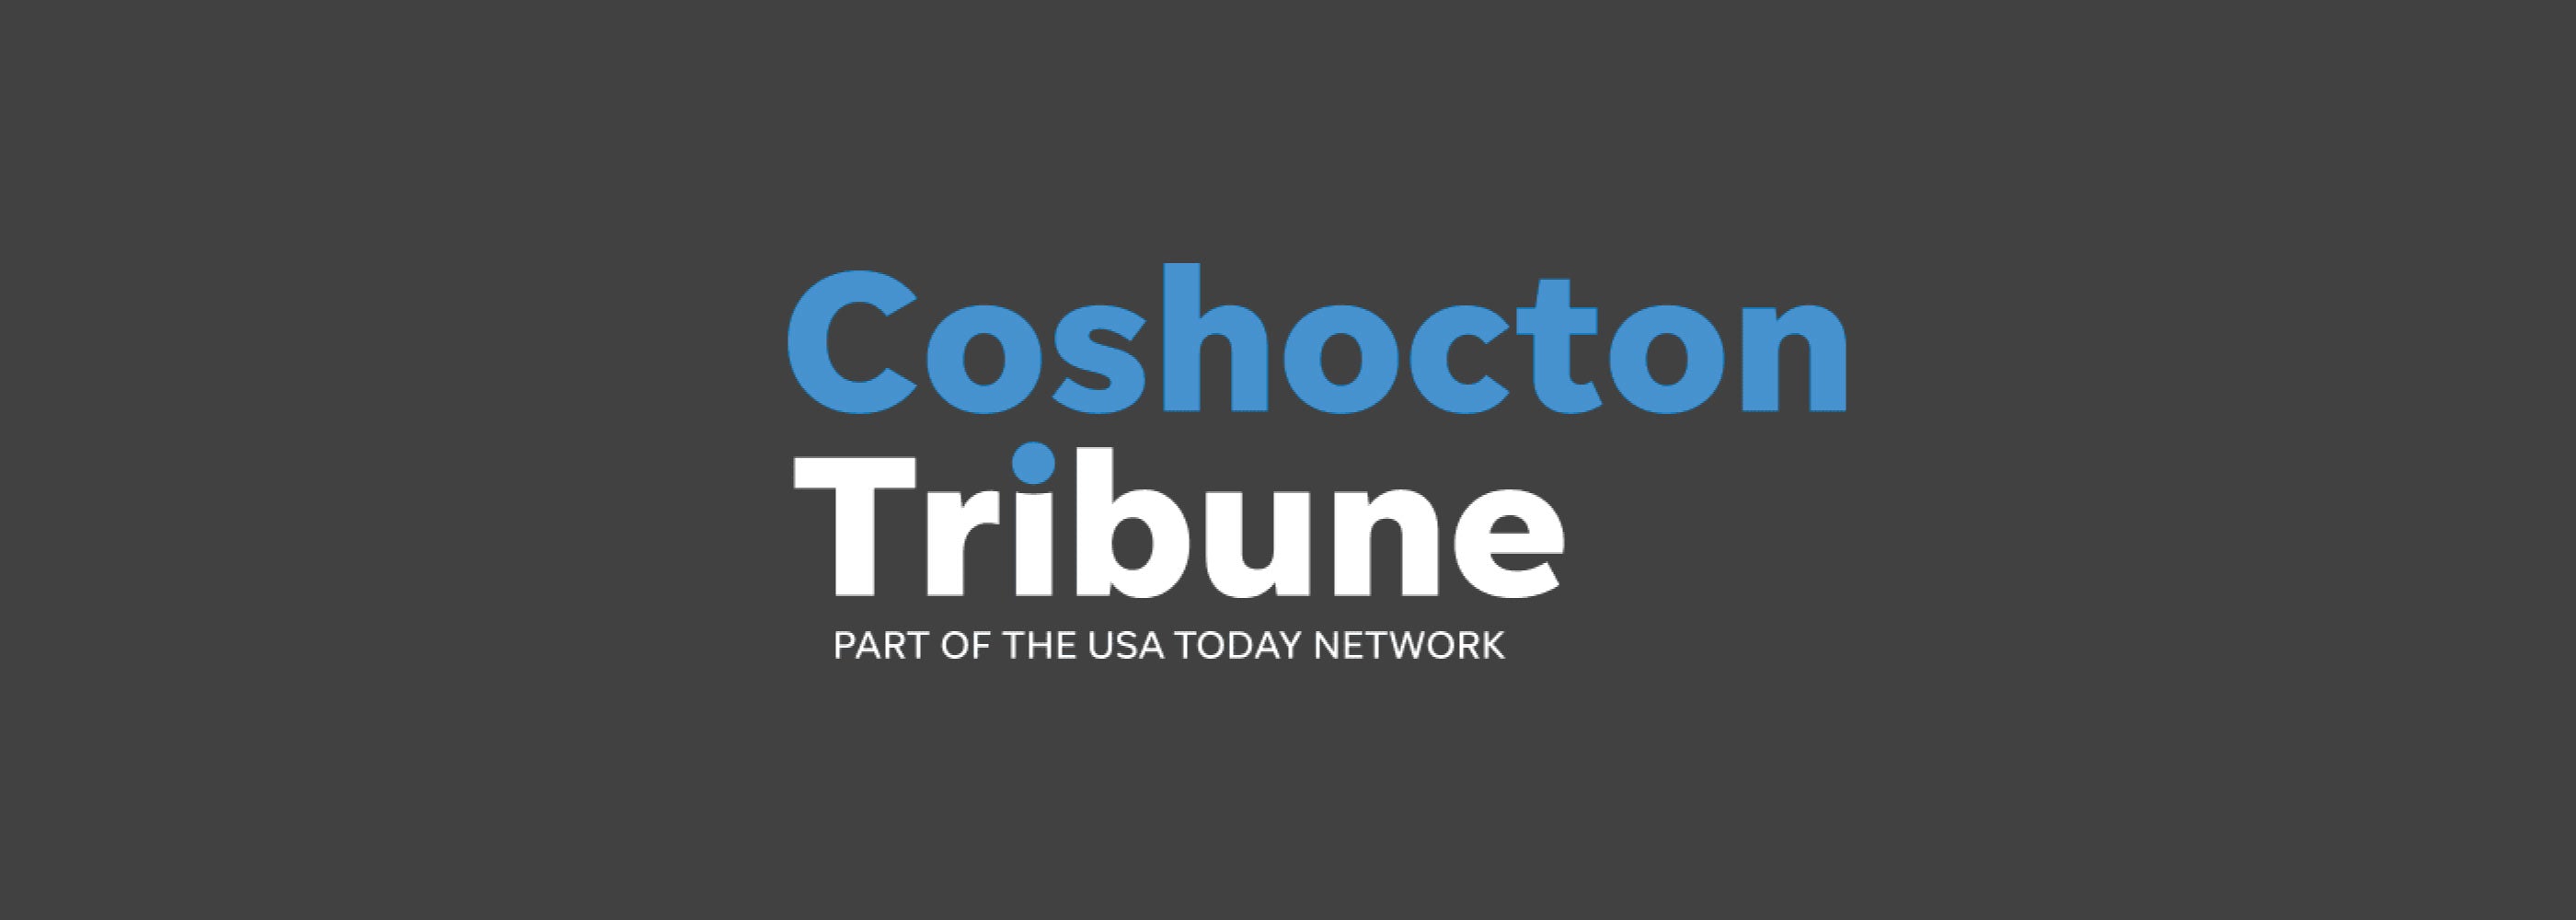 Coshocton Tribune Newspaper for Inmates SureShot Books